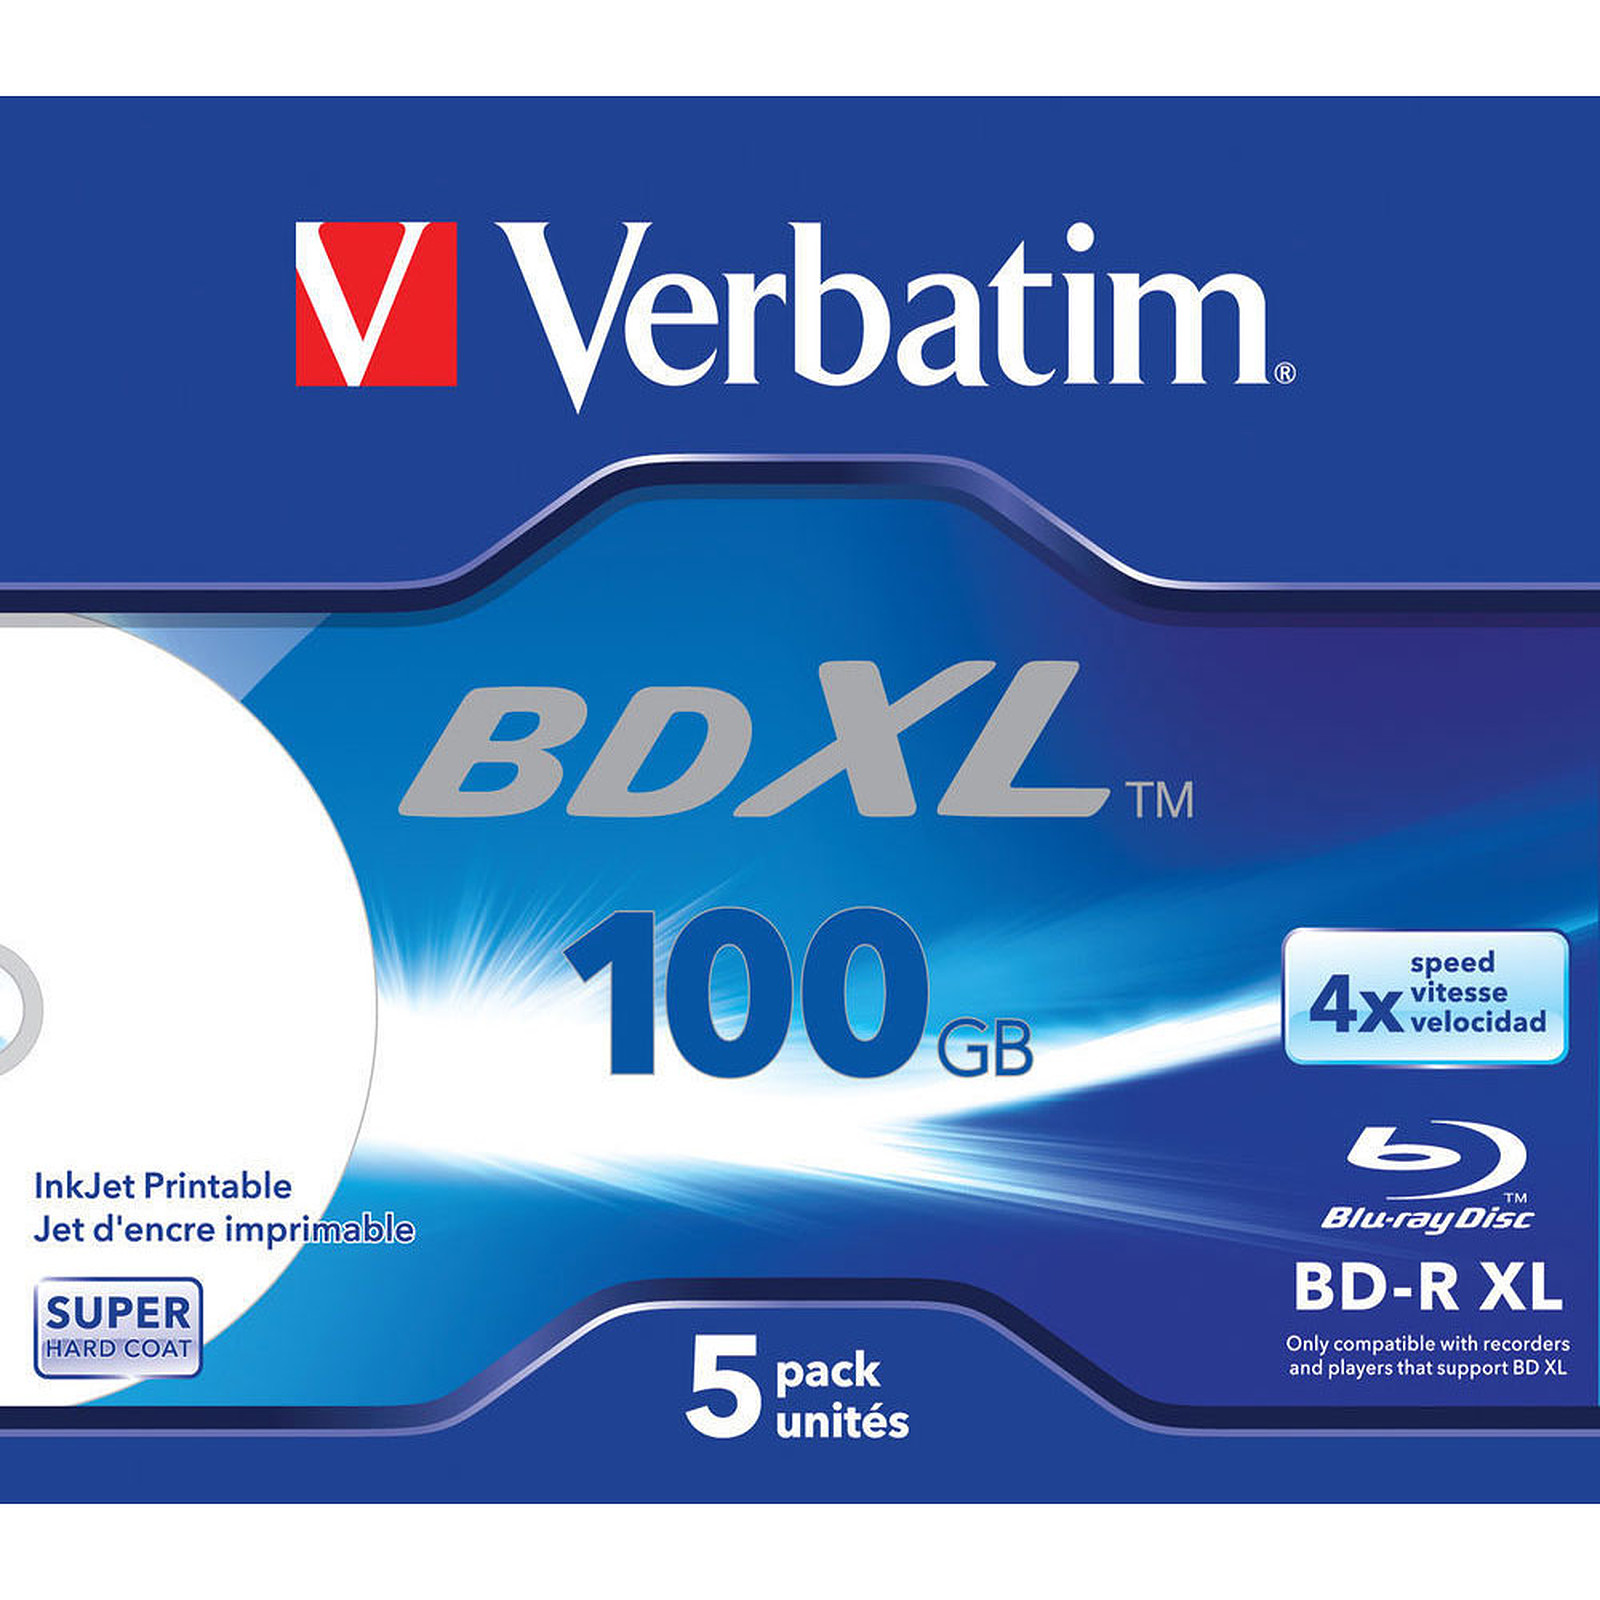 Verbatim BD-R XL 100 Go vitesse 4x imprimable (par 5, boite) - Blu-ray vierge Verbatim